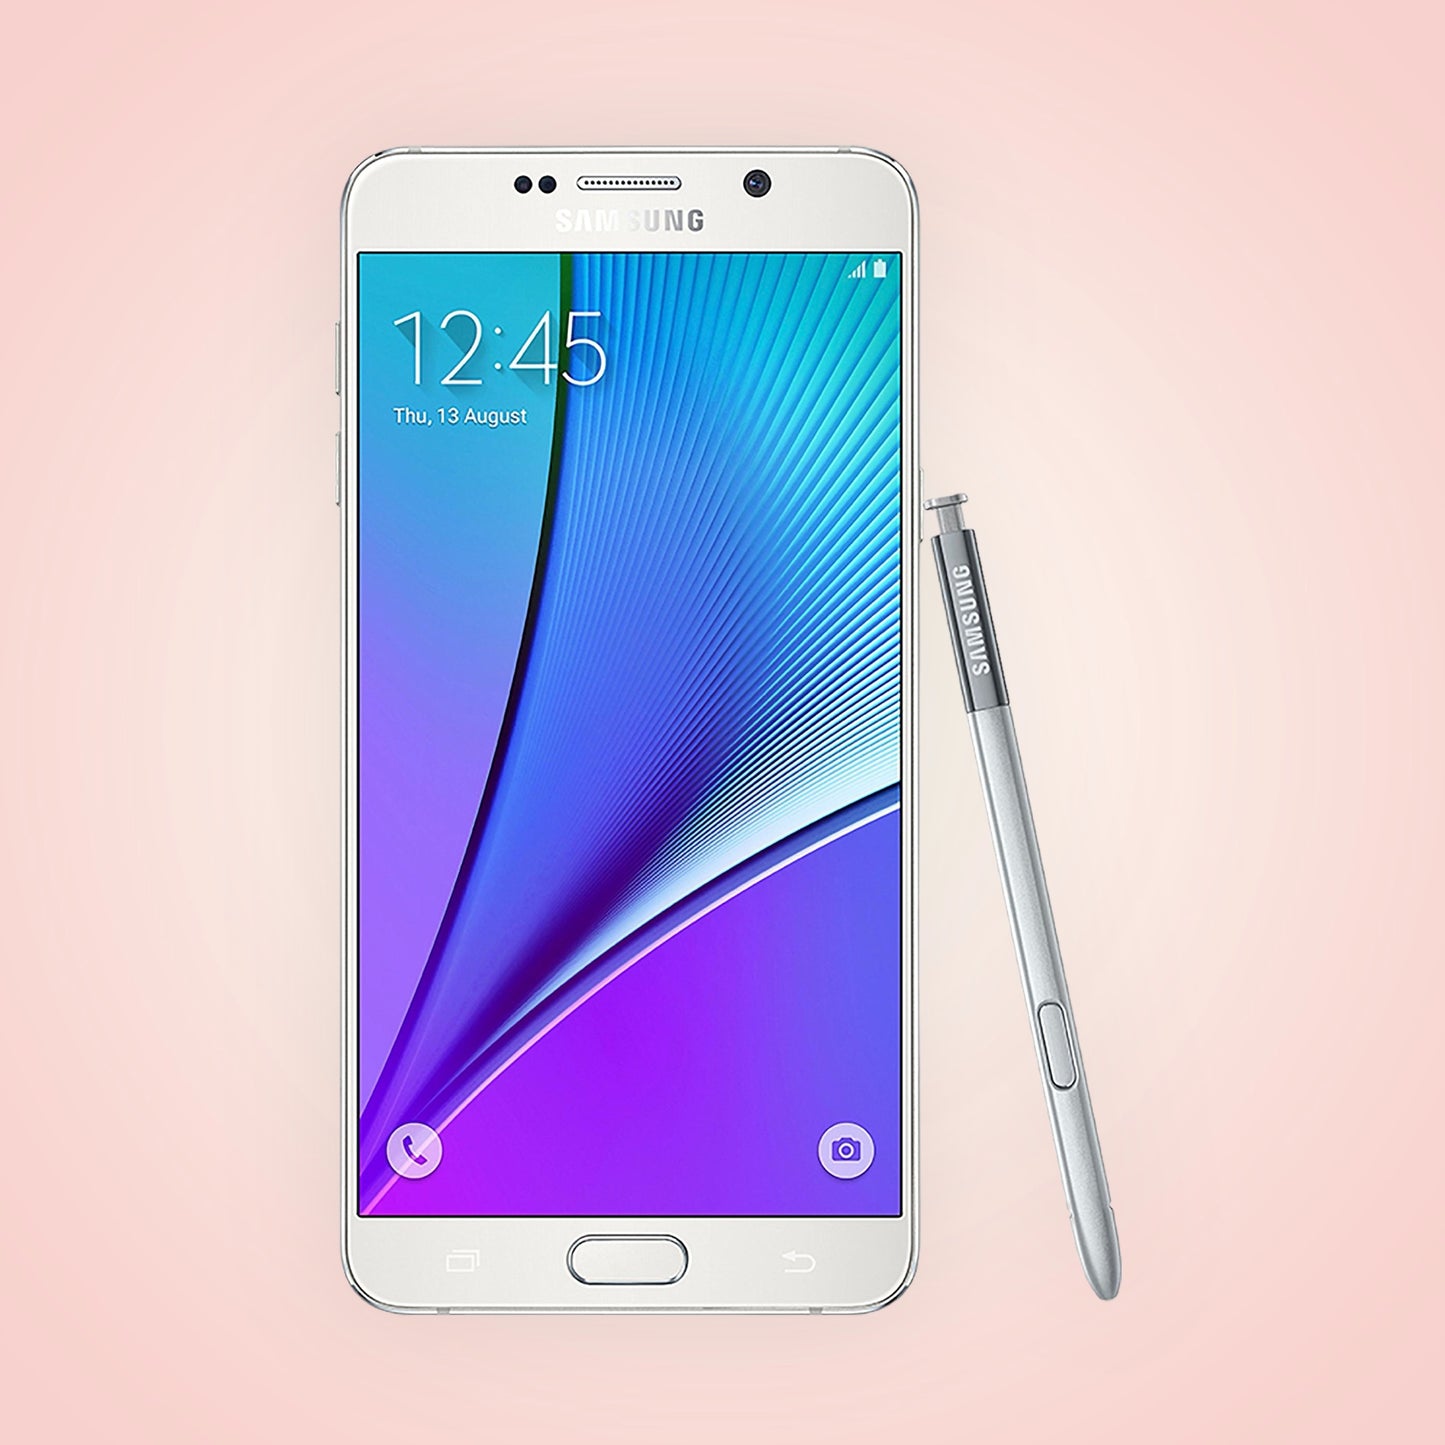 Galaxy Phone Note 5 - White - 32GB - CDMA GSM Unlocked